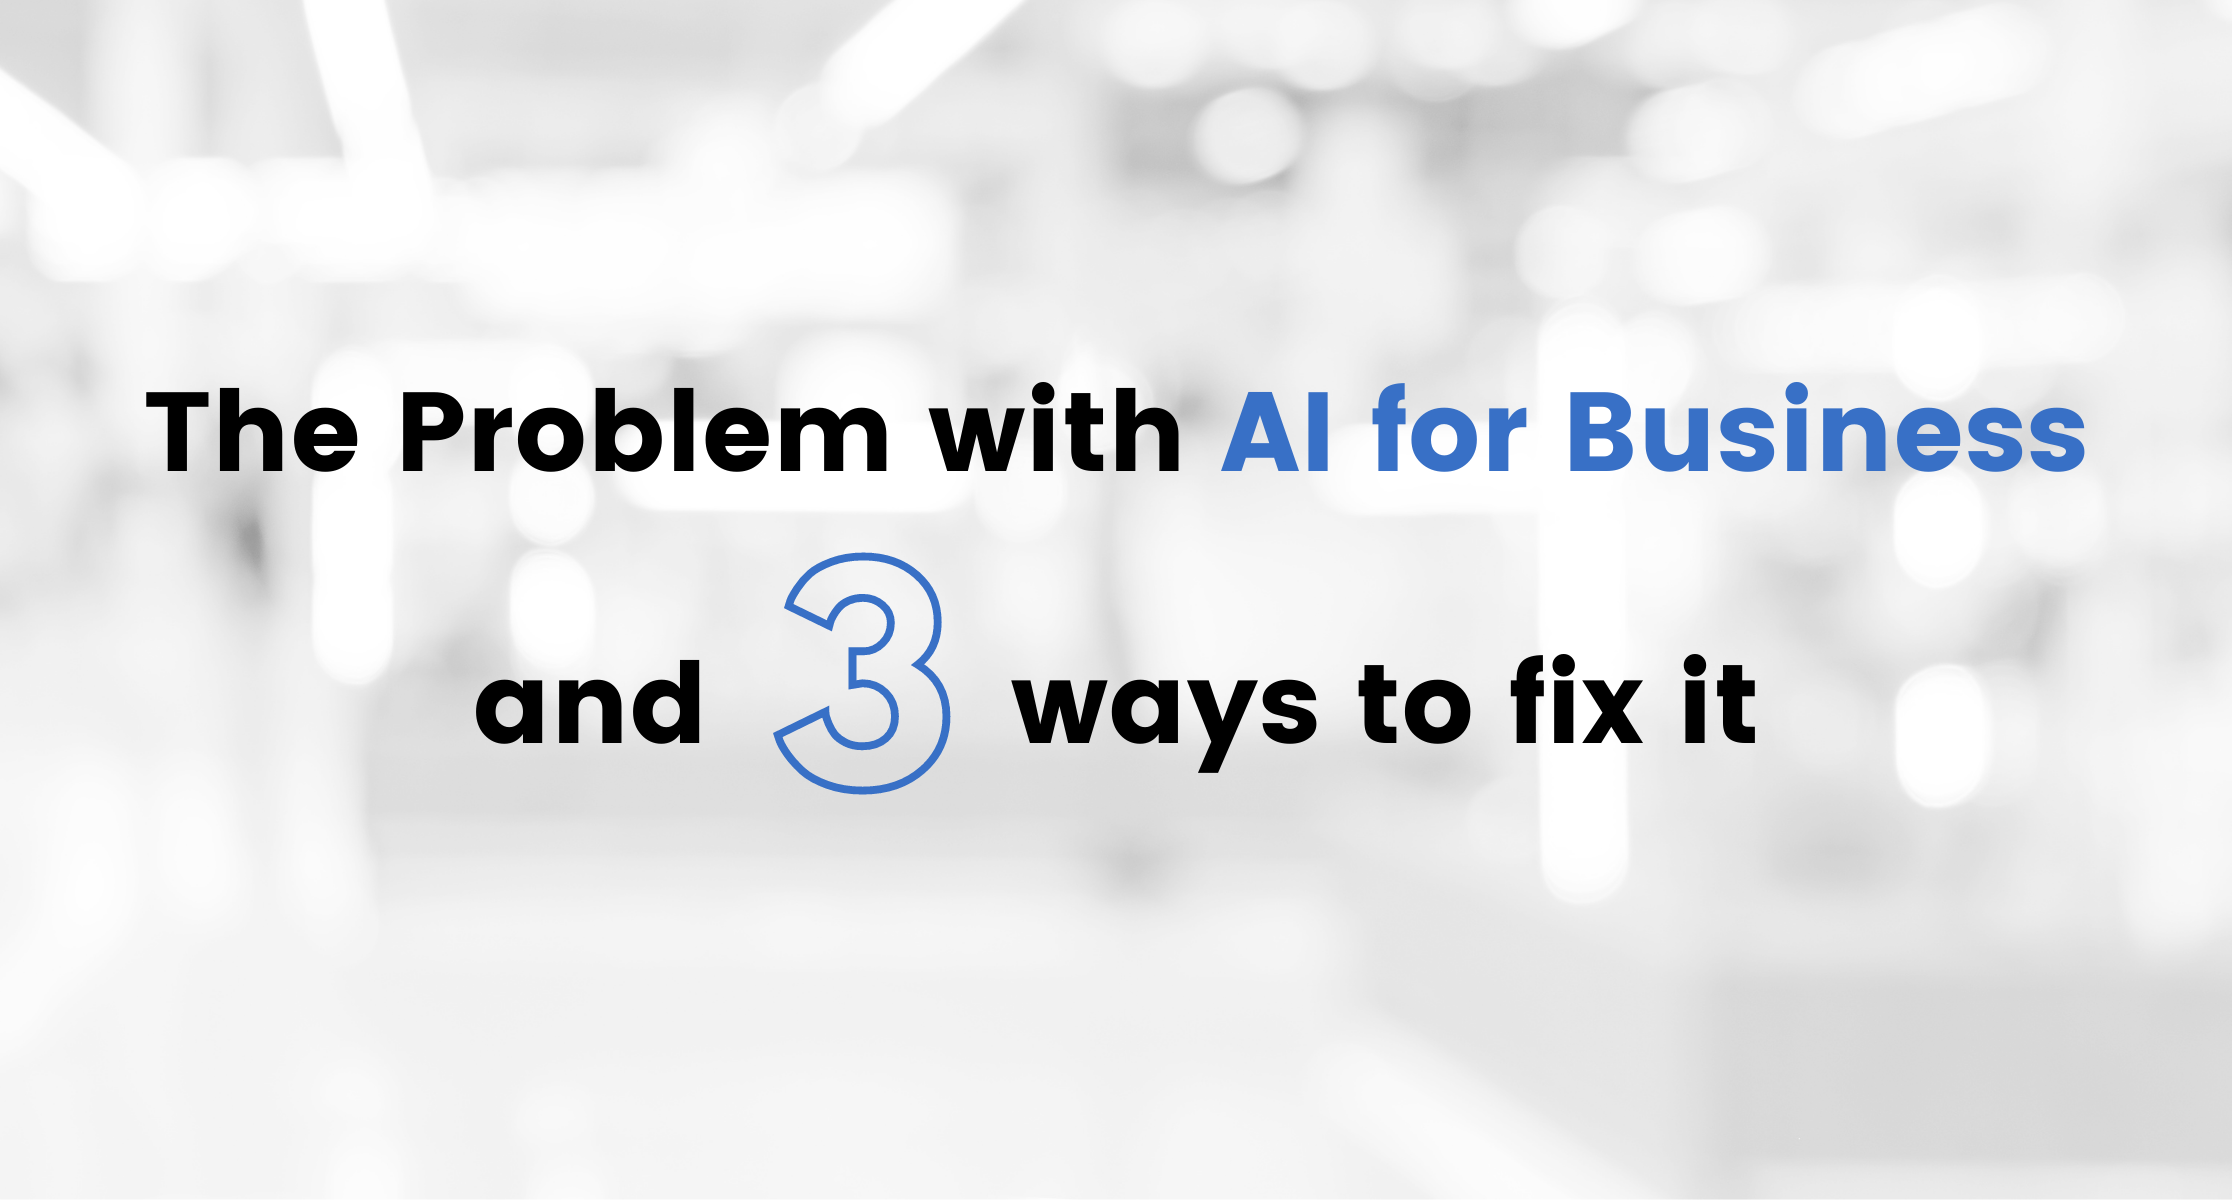 How do you solve a problem like AI? Tax it